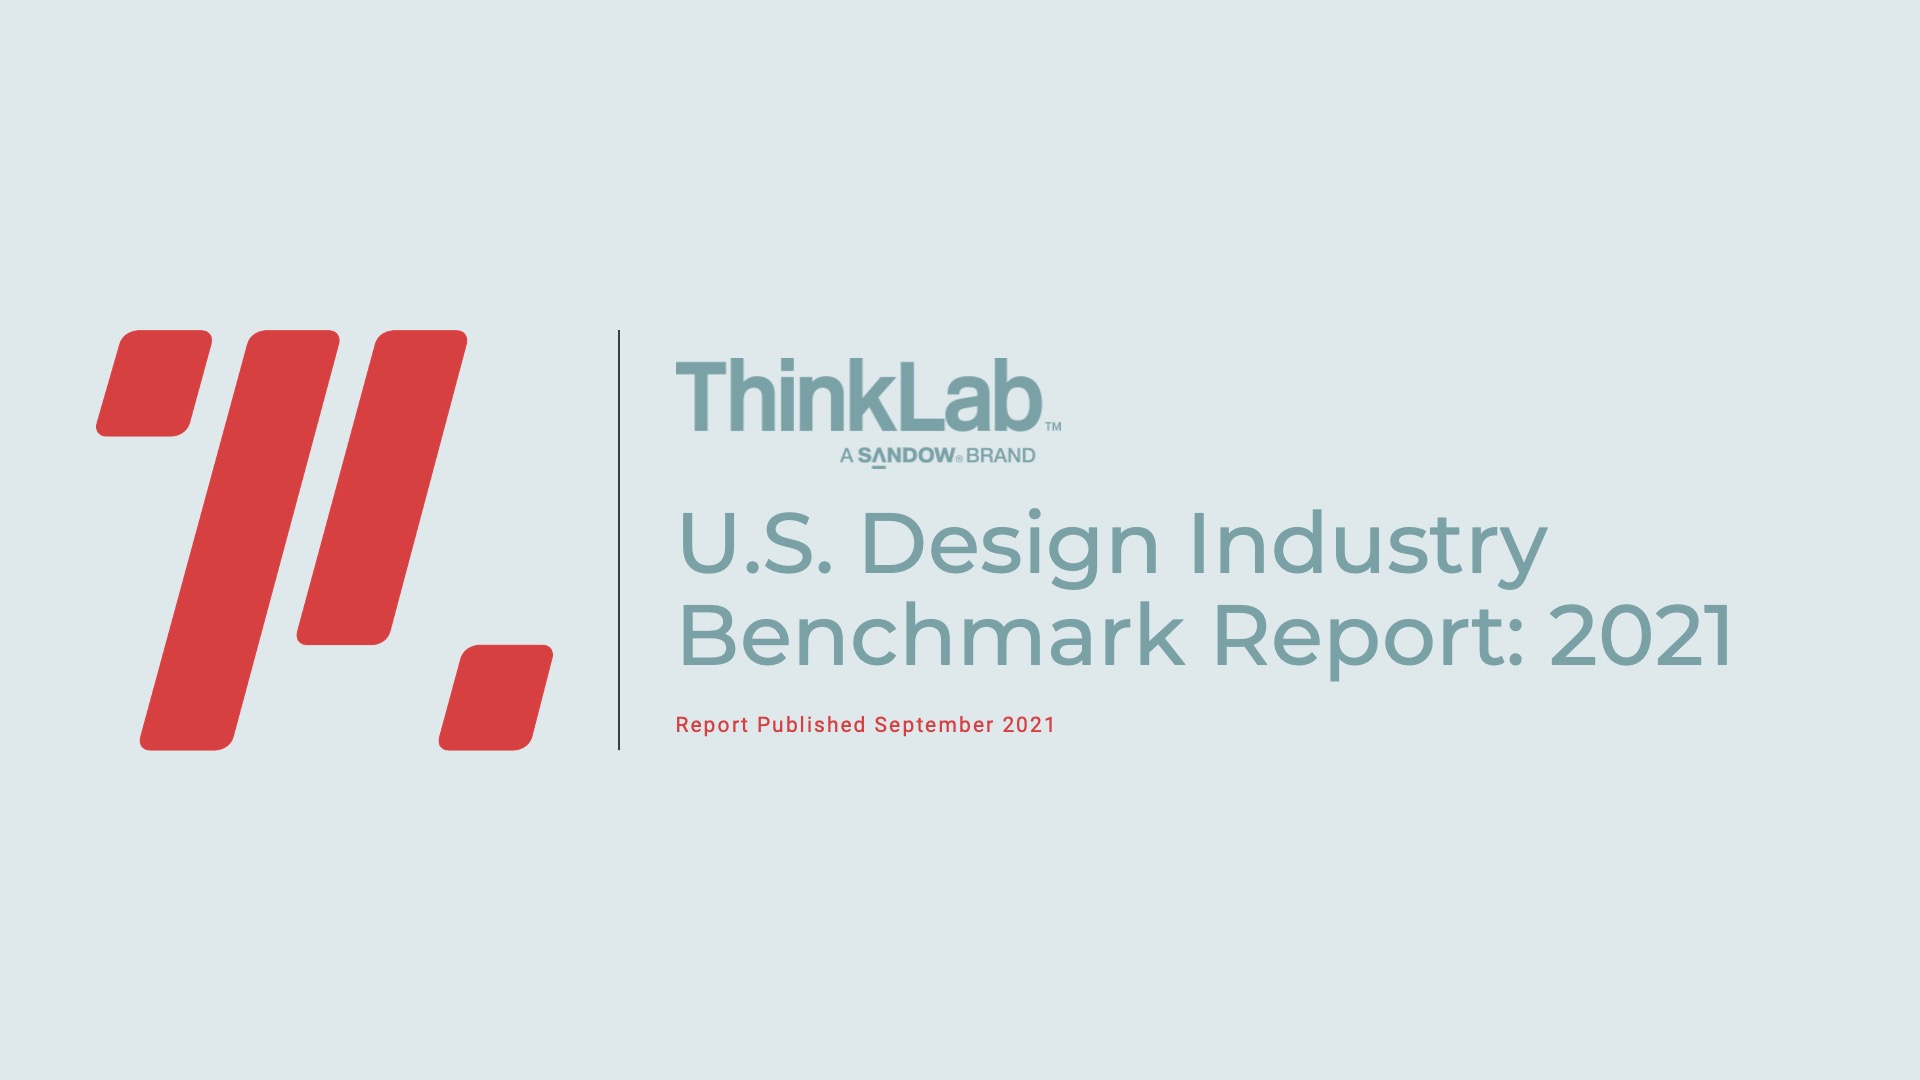 ThinkLab U.S. Design Industry Benchmark Report